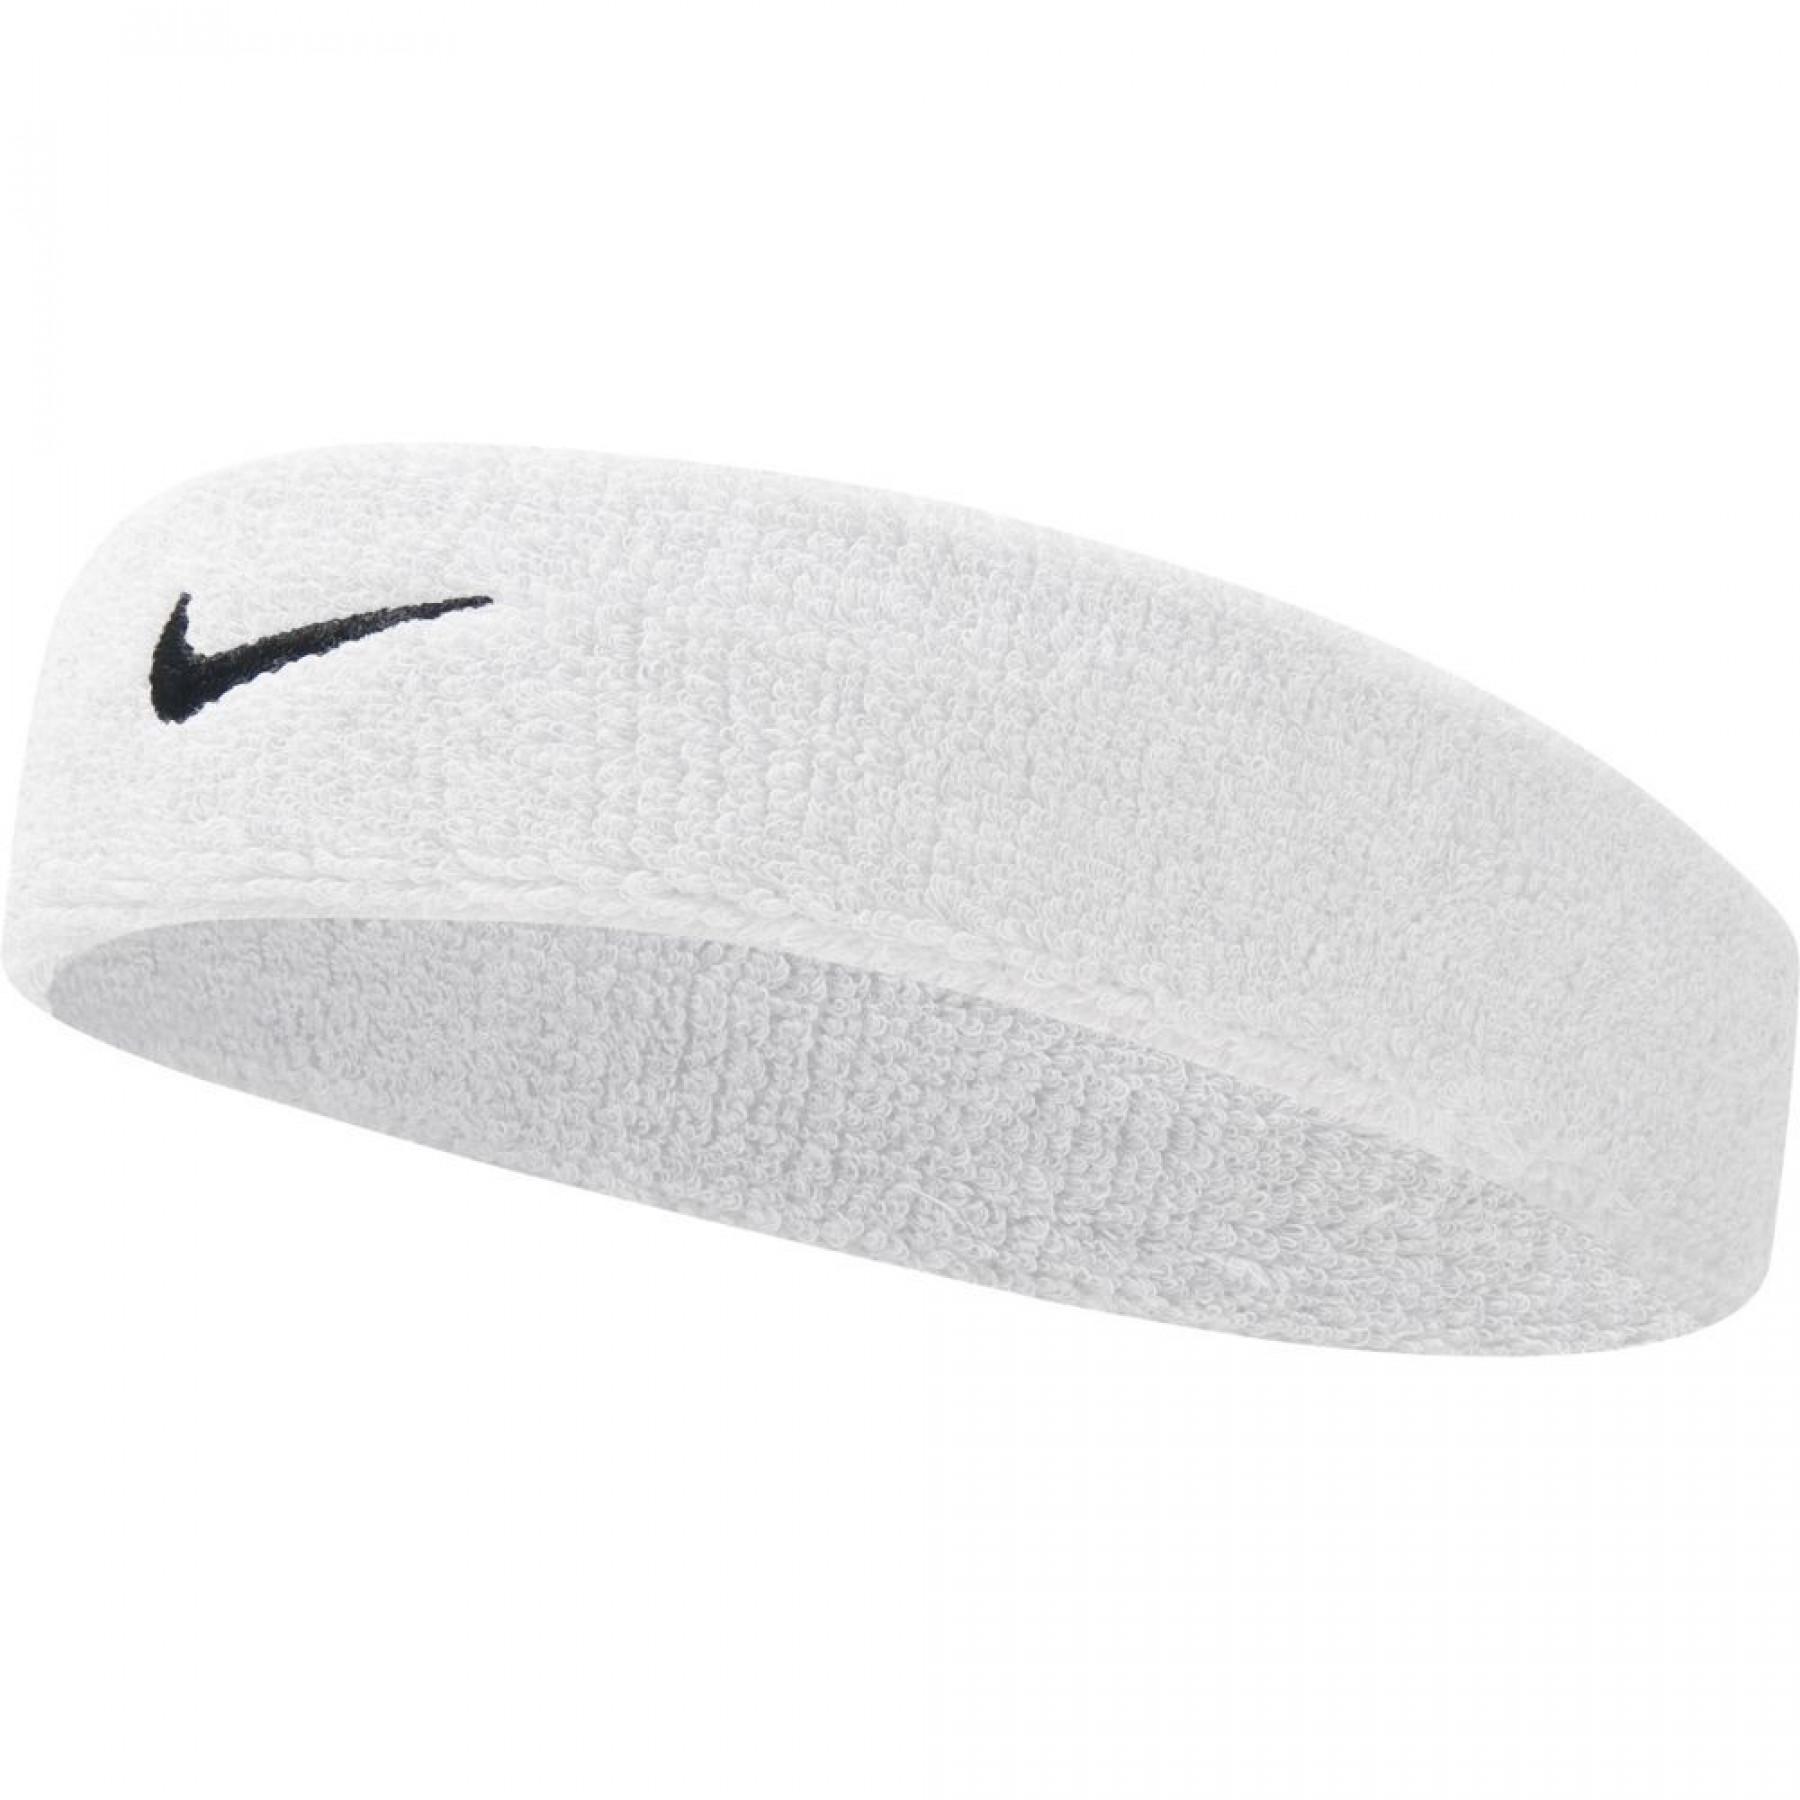 Stirnband Nike swoosh